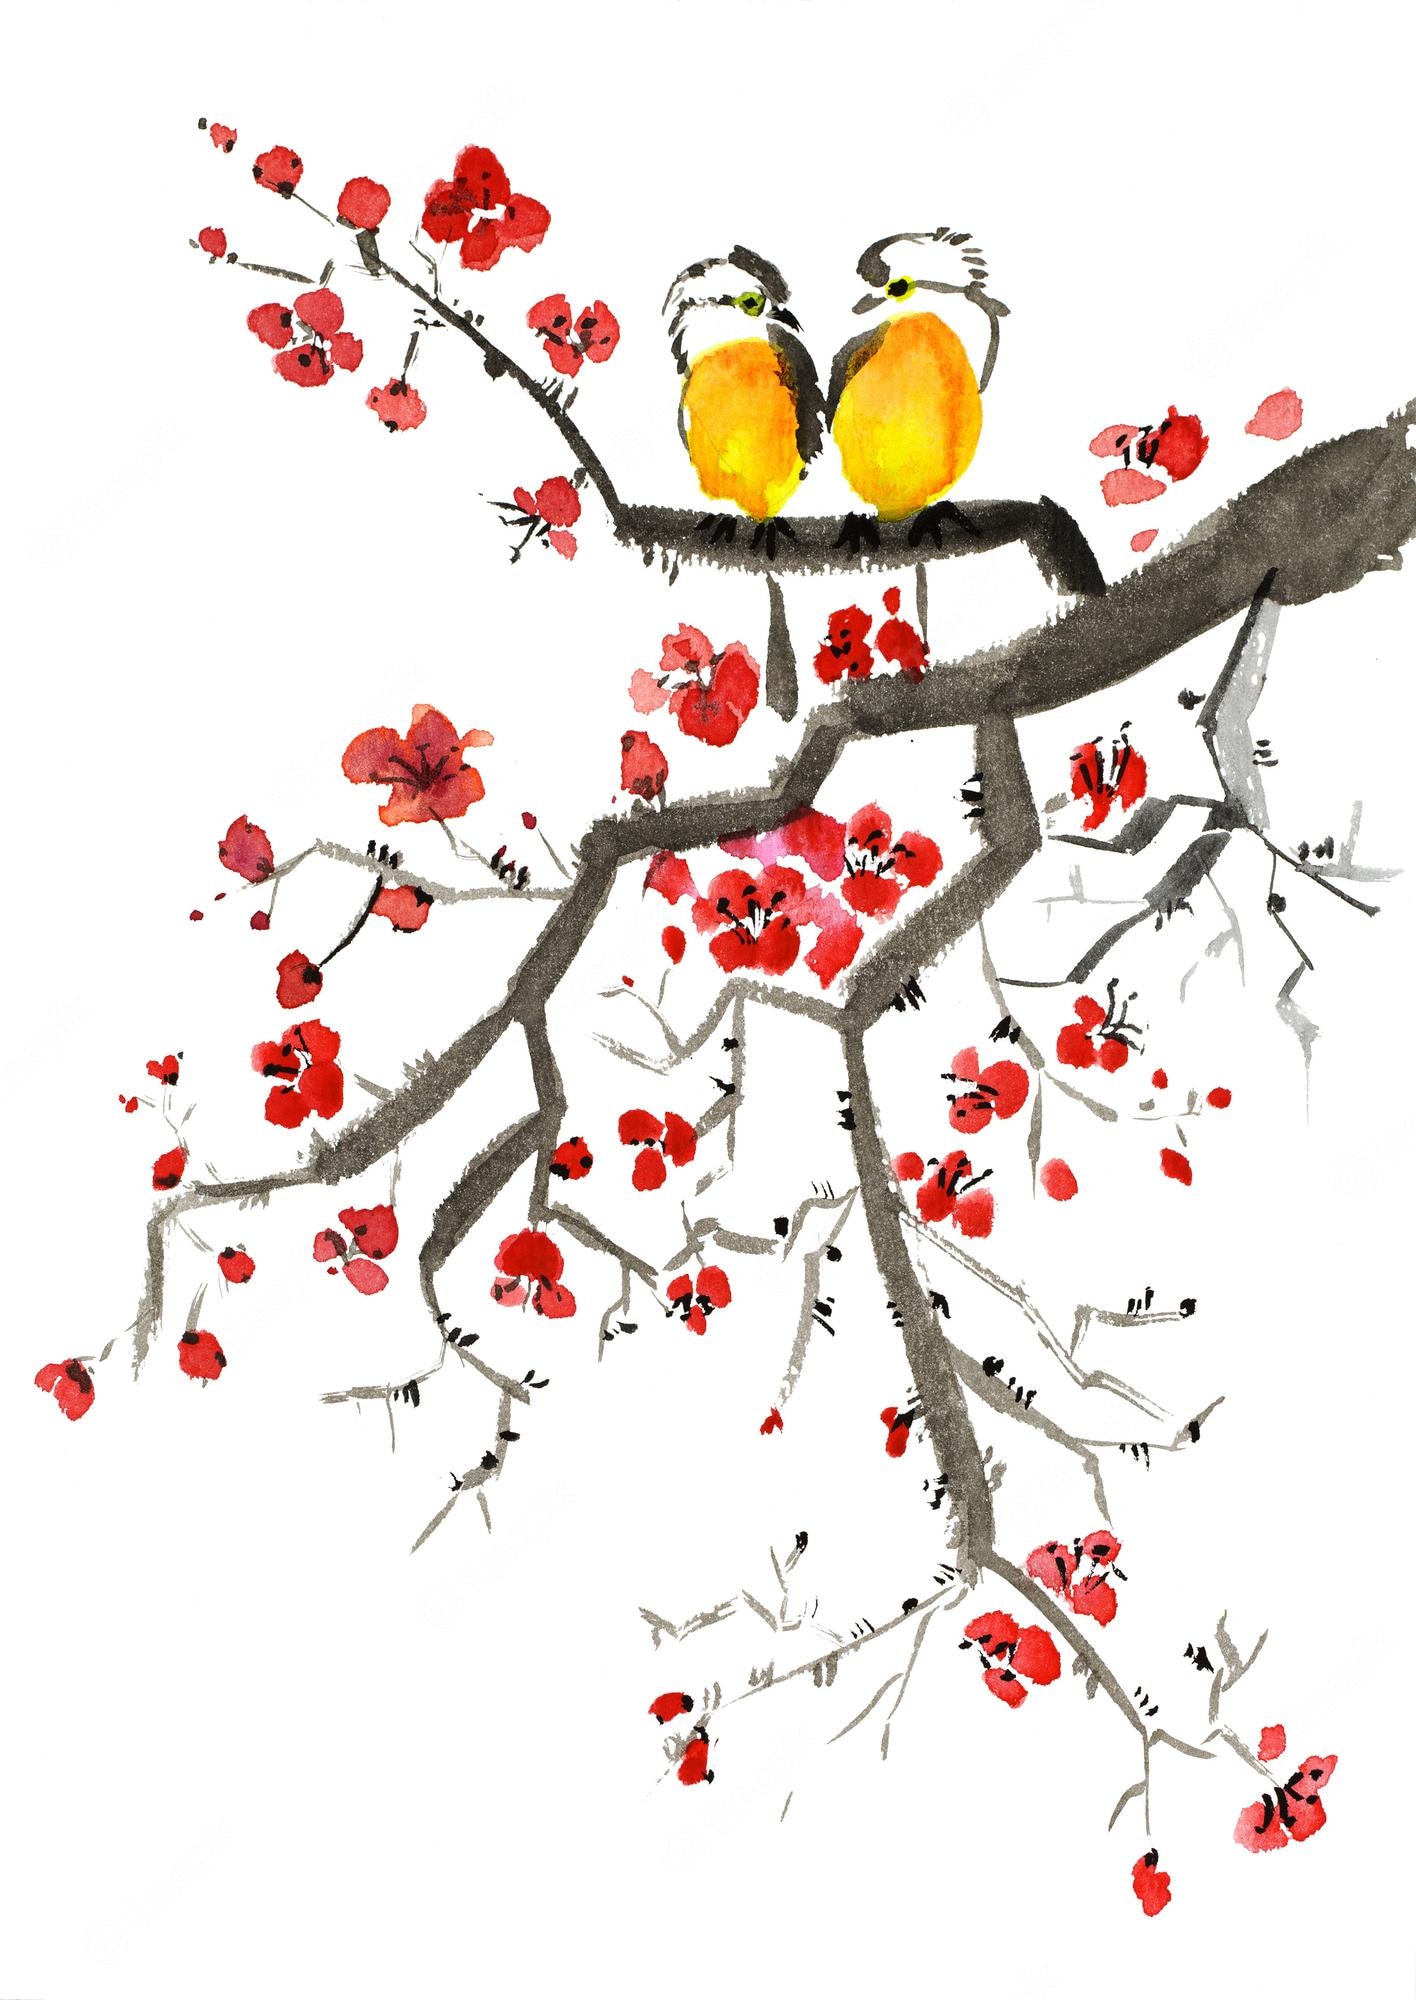 rama-sakura-floreciente-pajaros-acuarela-arte-estilo-tradicional-japones-sumi-e_427447-1200.jpeg